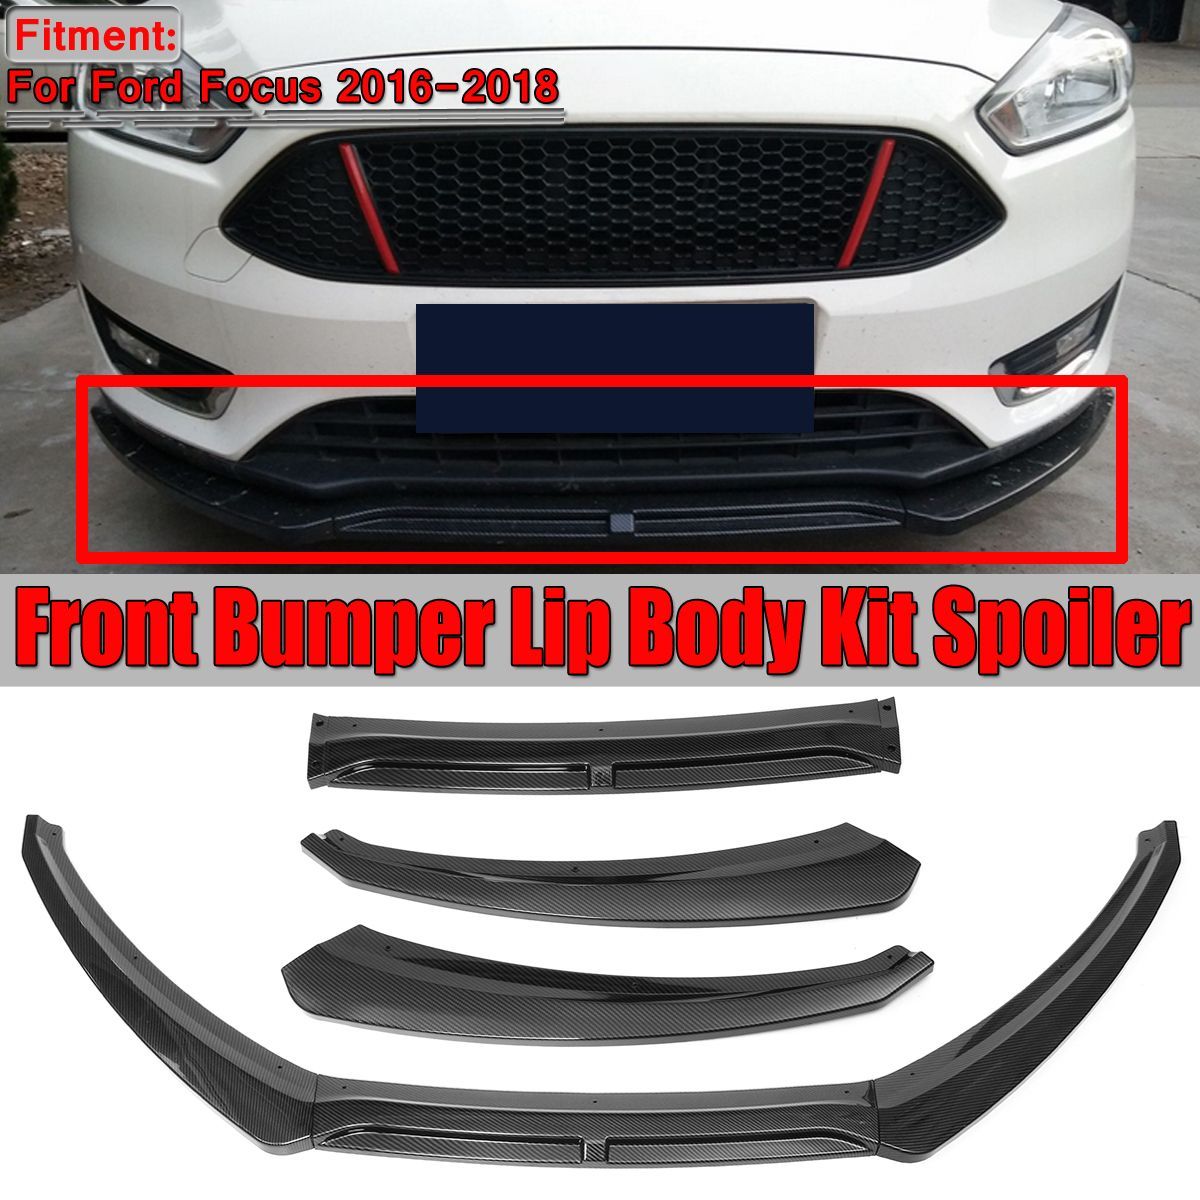 Car-Carbon-Fiber-Look-Front-Bumper-Lip-Body-Kit-Spoiler-For-Ford-Focus-2016-2018-1685821